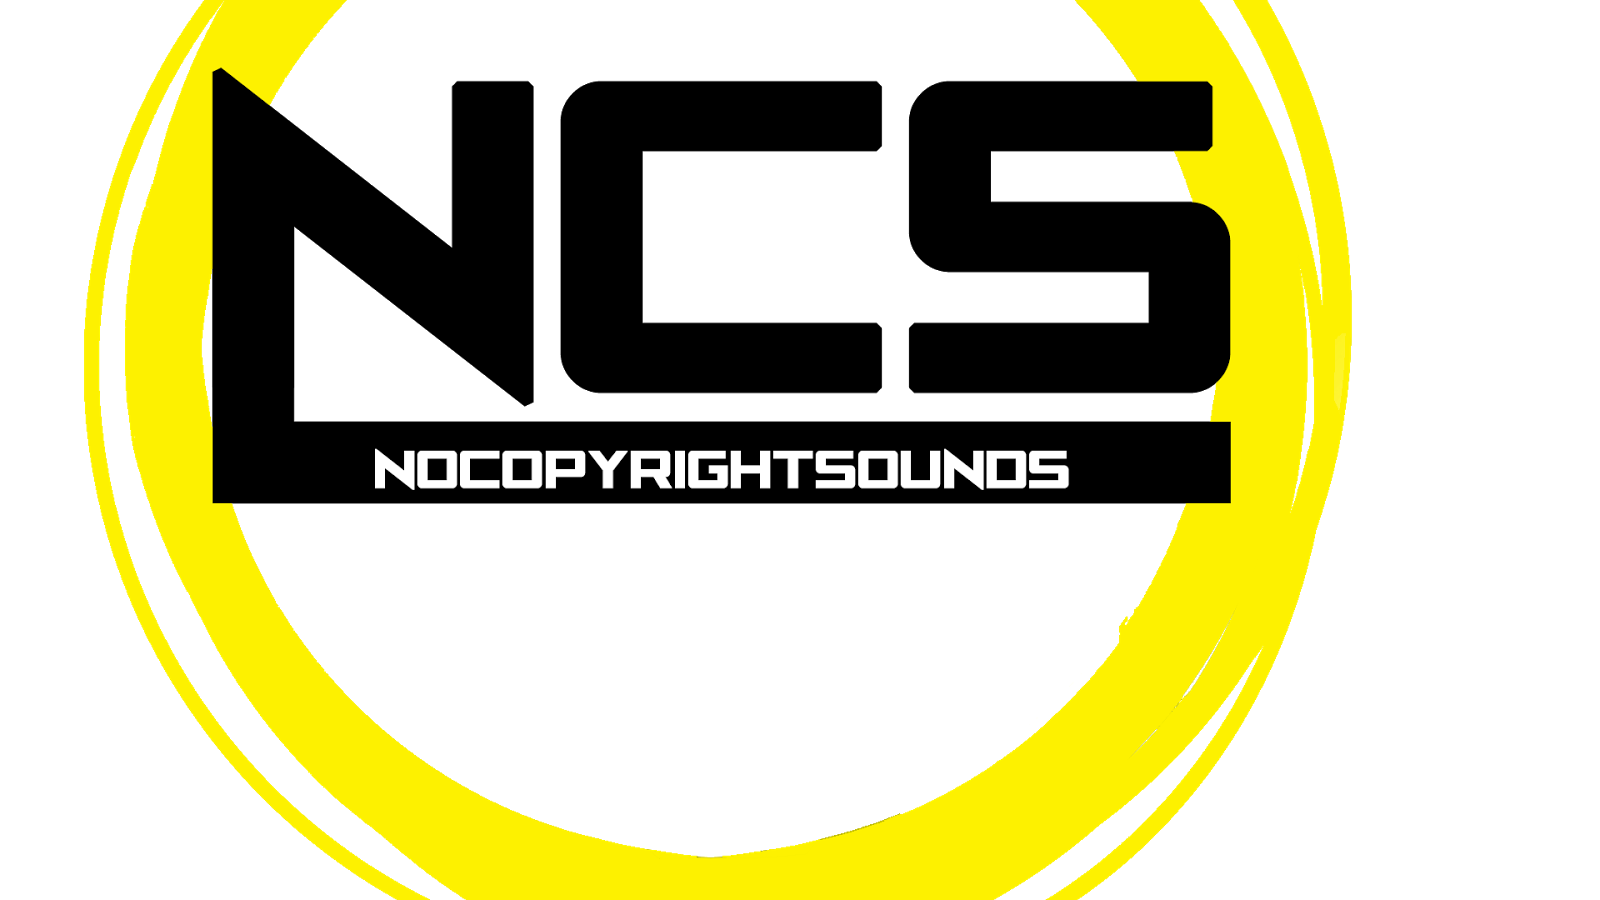 Ncs logo png 3 » PNG Image.